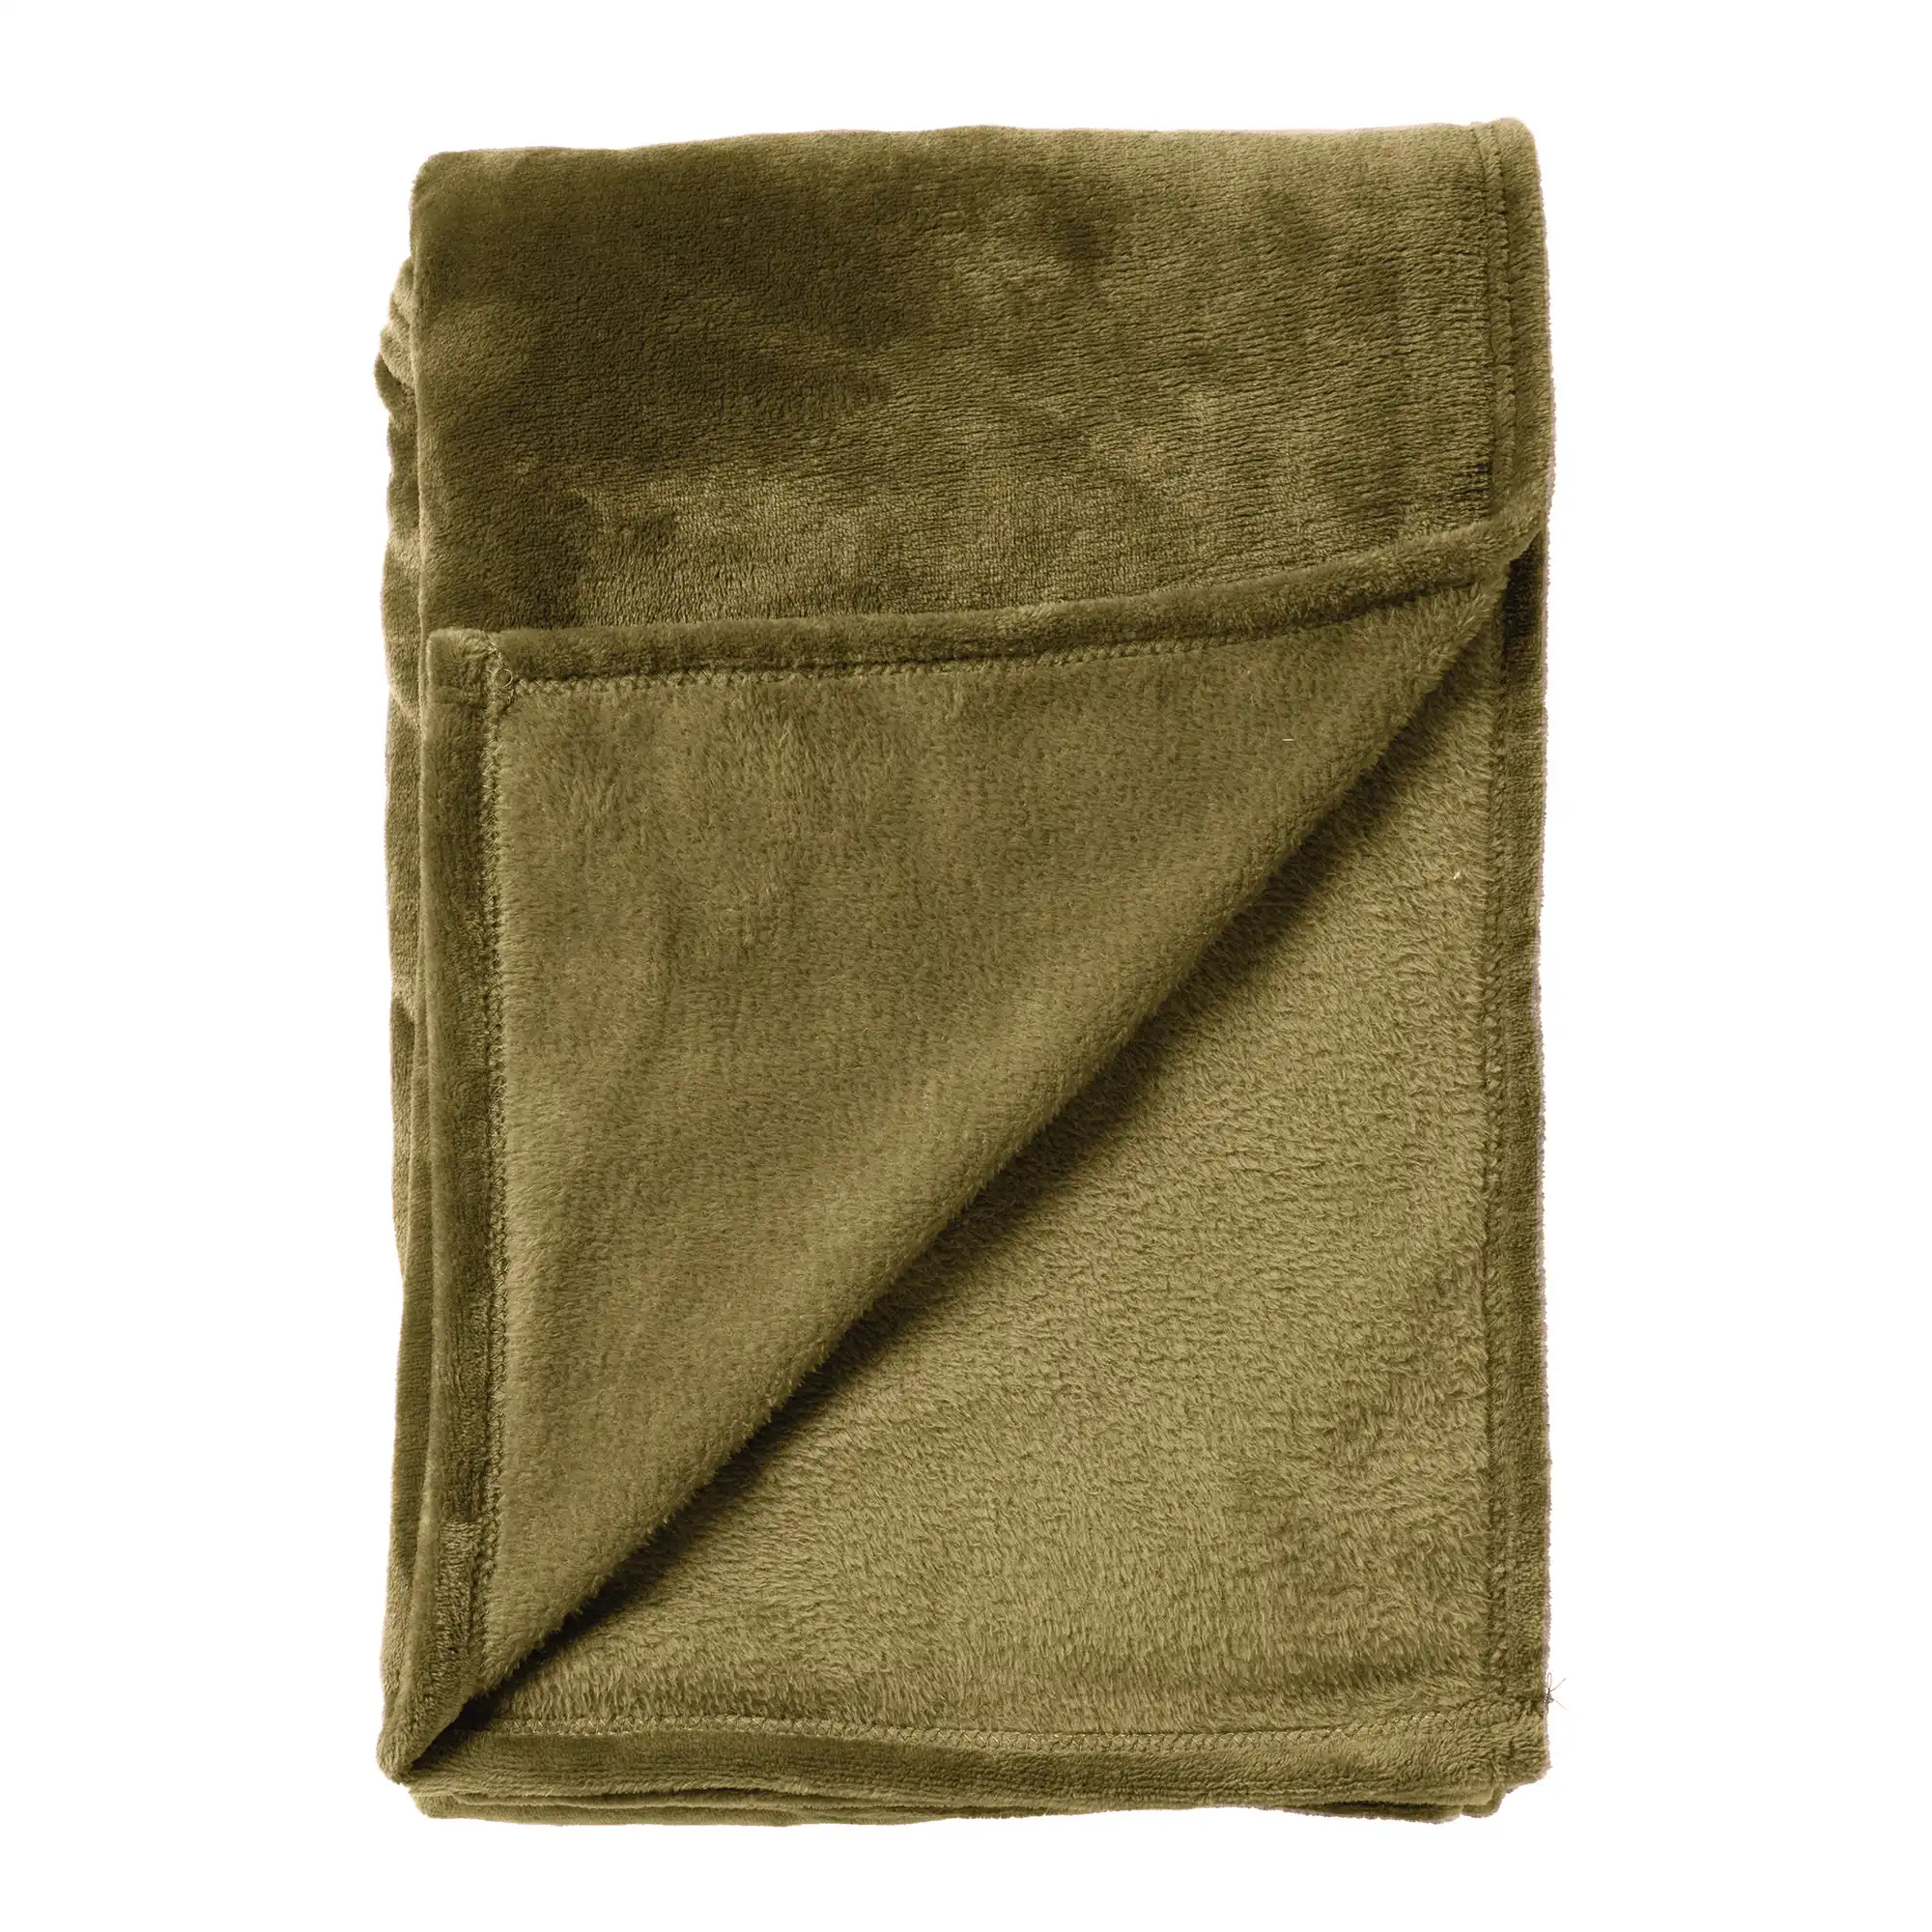 BILLY - Plaid flannel fleece 150x200 cm - Military Olive - groen - superzacht